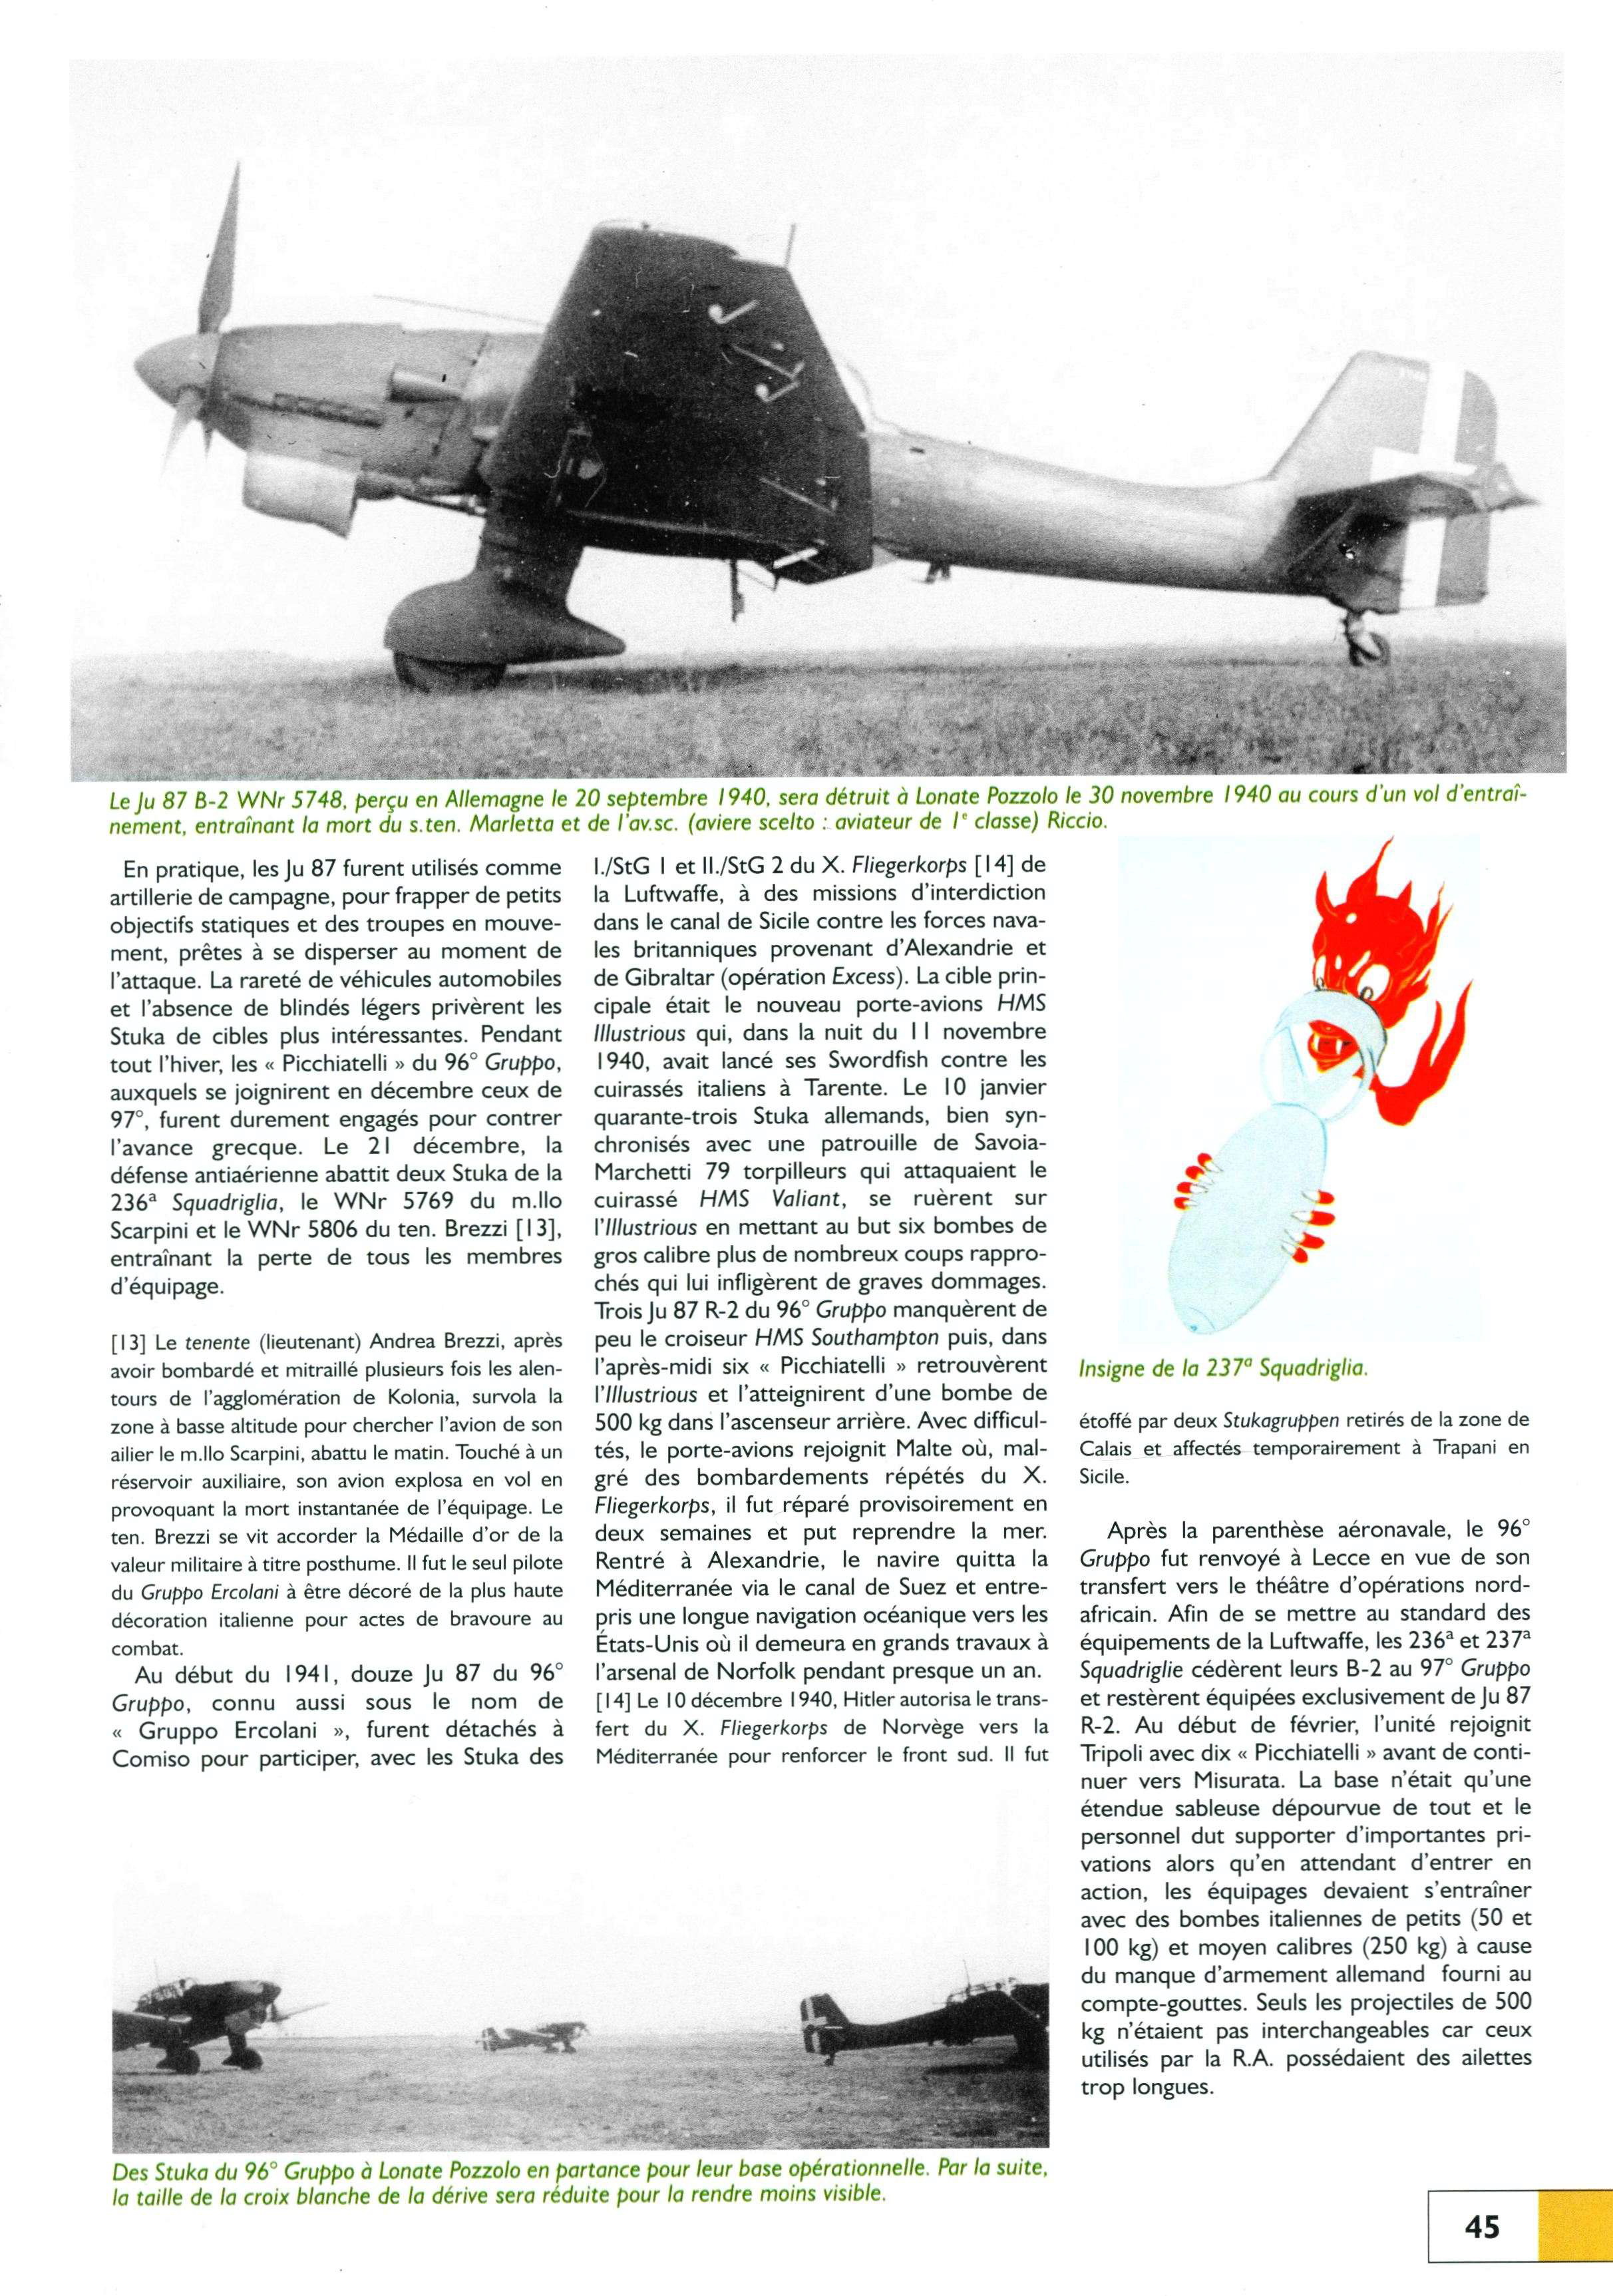 Junkers Ju 87 Picchiatello RA article by Avions 160 page 45